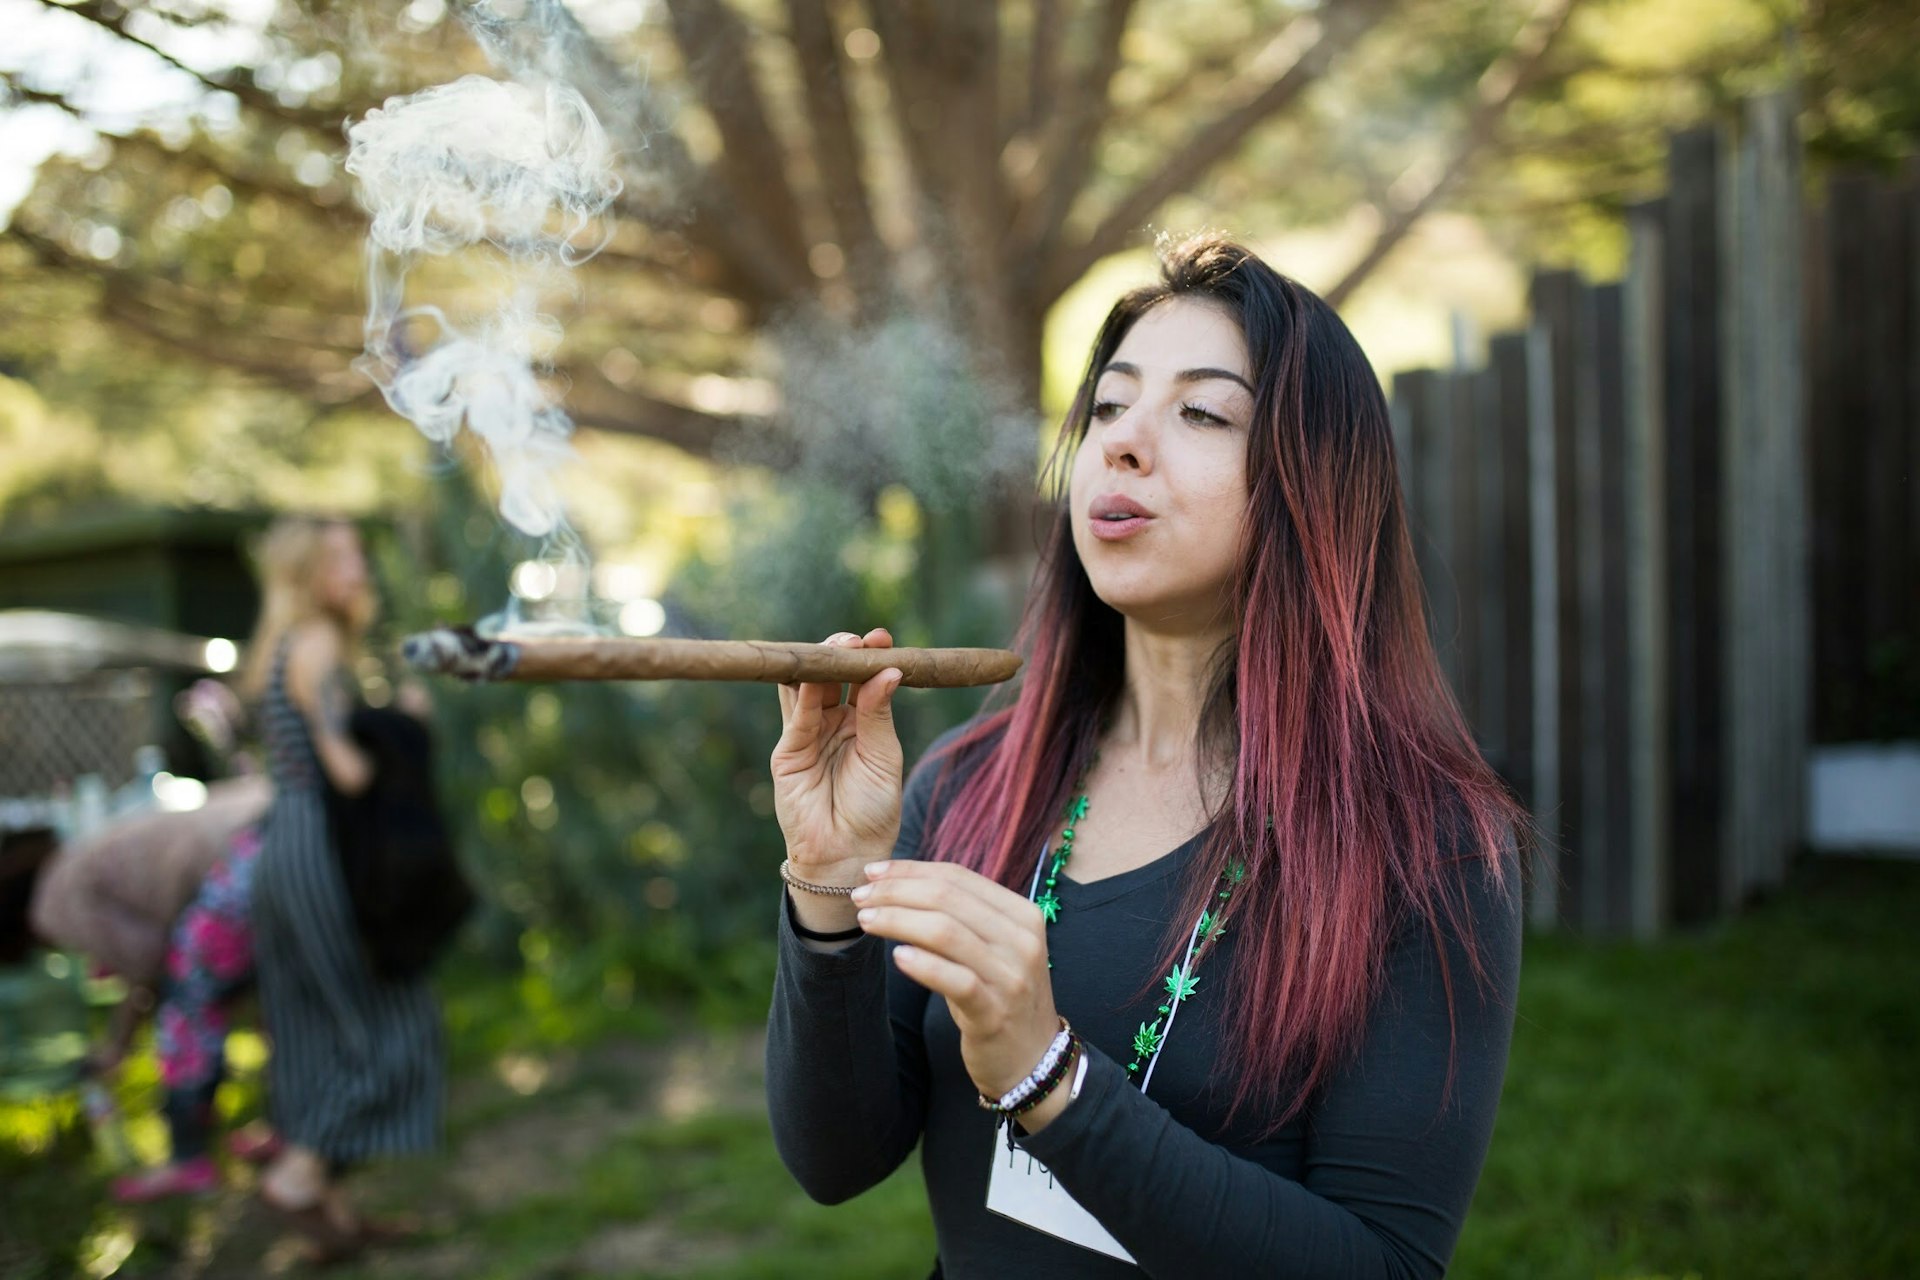 Inside California’s all-women cannabis retreats